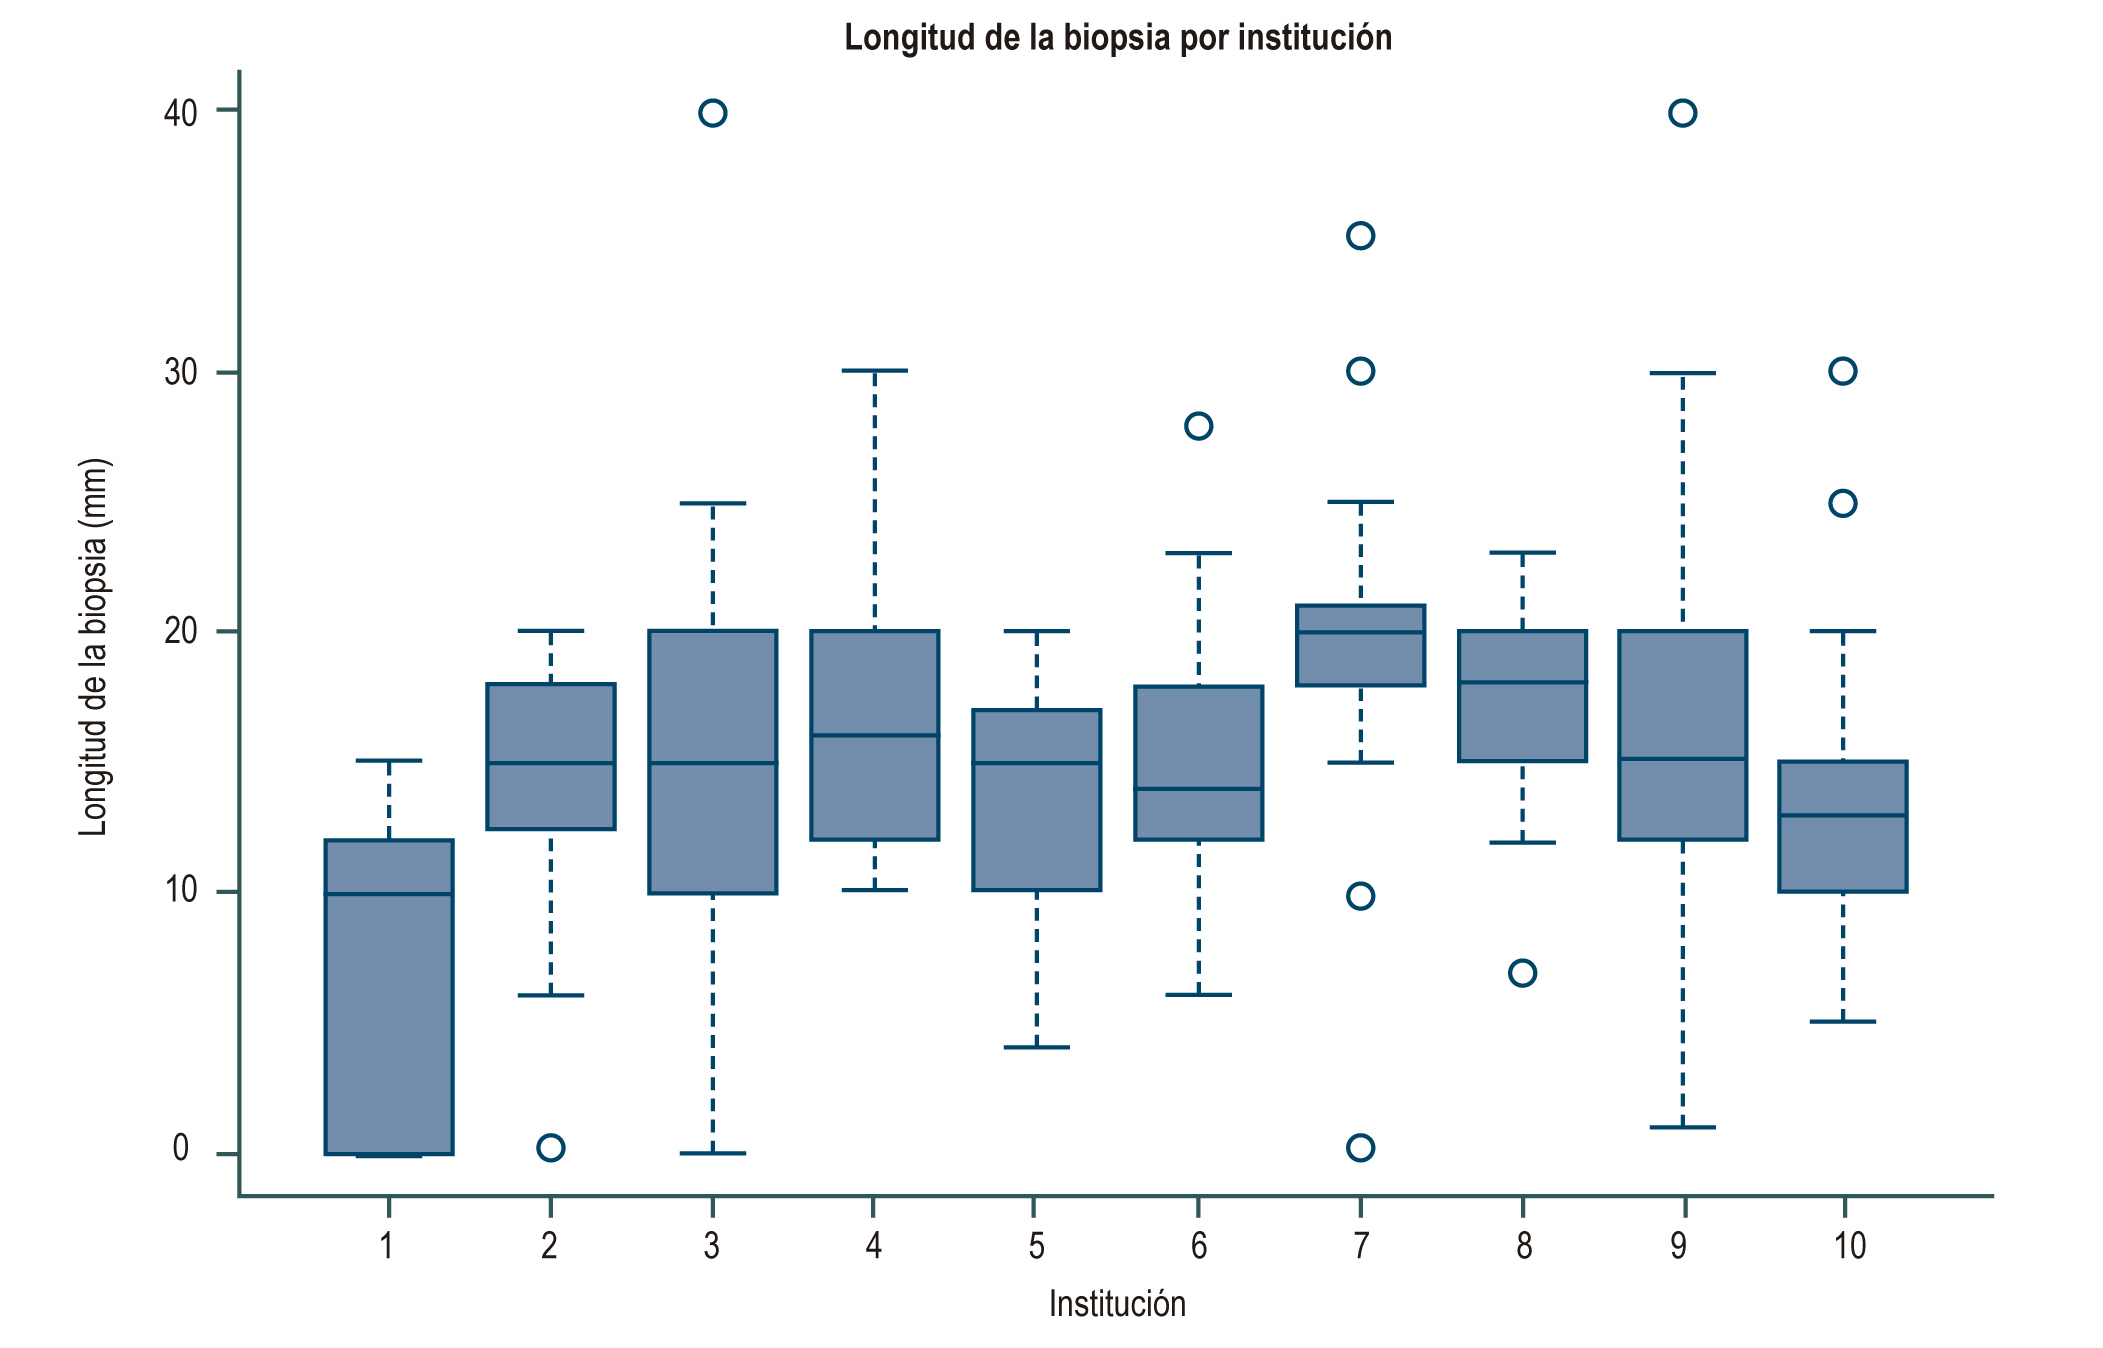 Figura 1. Longitud de la biopsia hepática por institución en mm. Kruskal-Wallis, p = 0,0001 (prueba de Kruskal-Wallis)